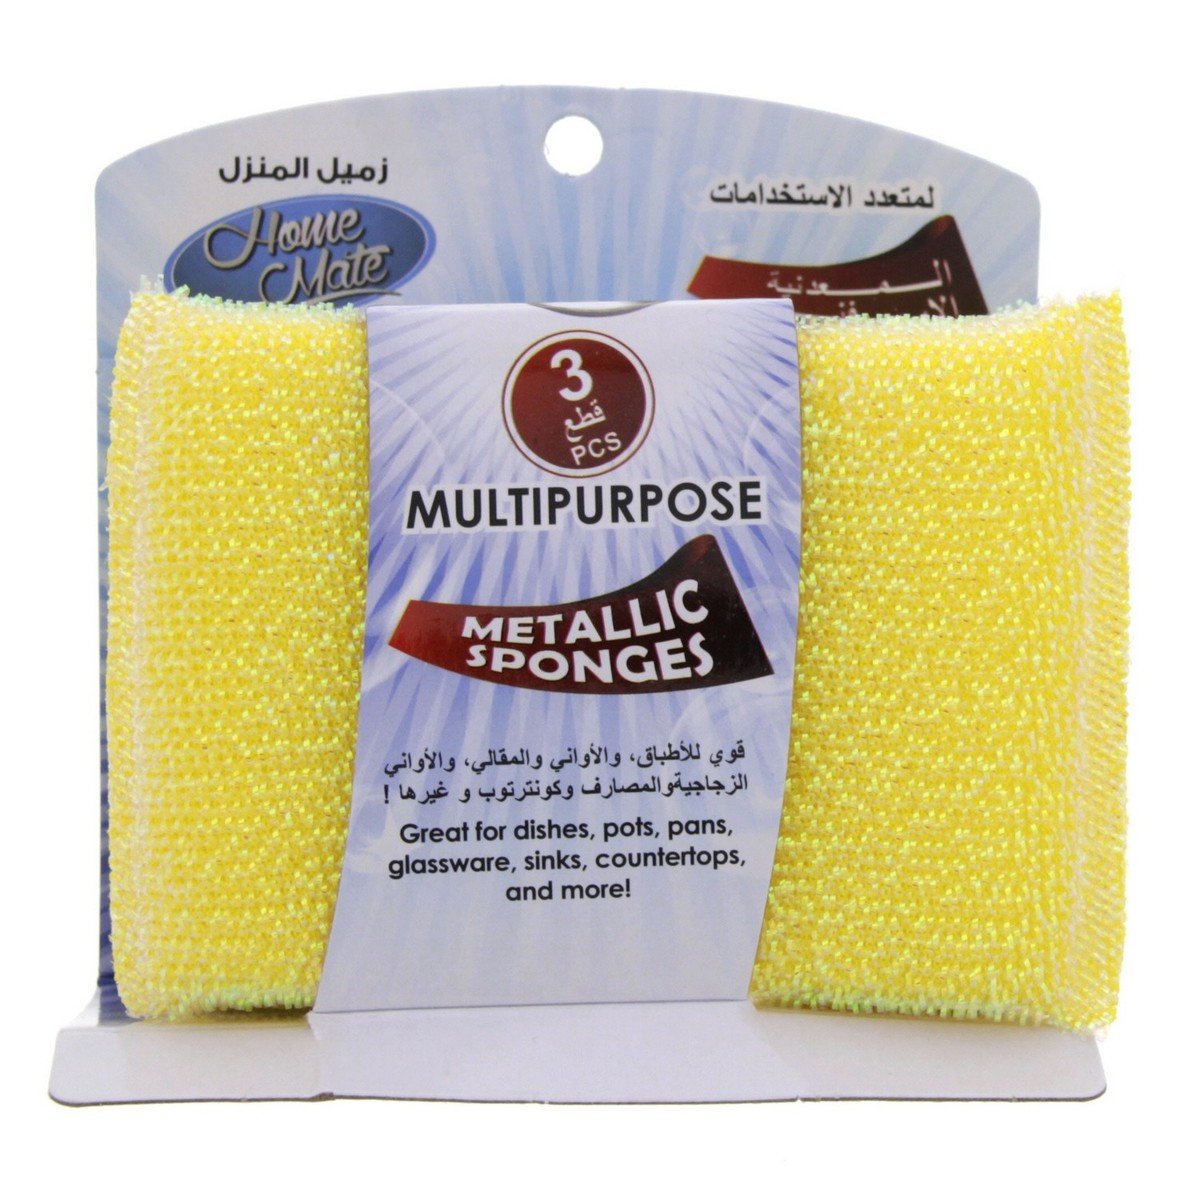 Home mate Multipurpose  Metallic Sponges 3pcs